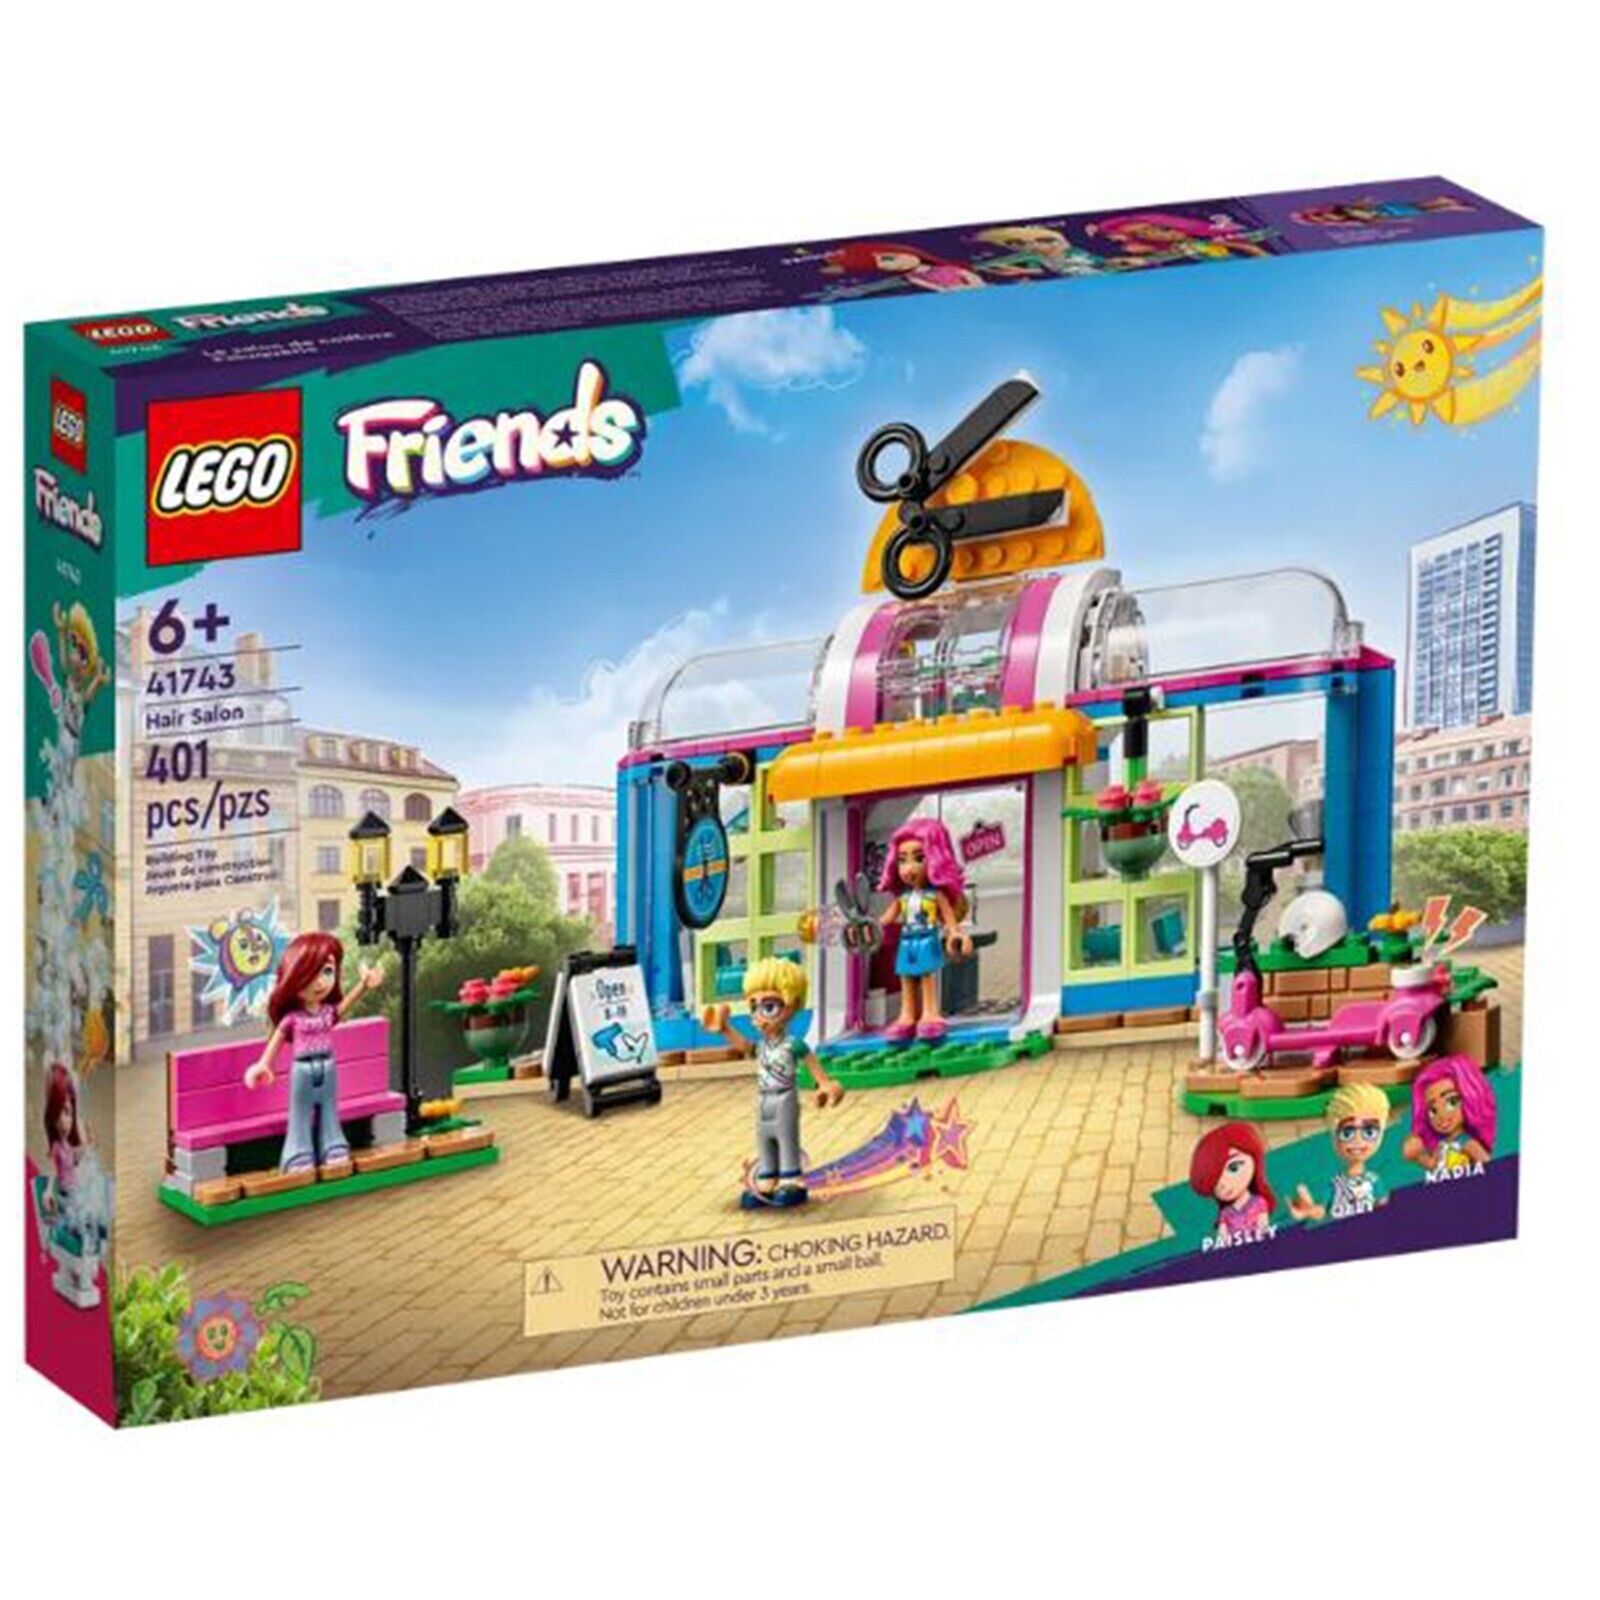 LEGO® Friends Hair Salon Building Set 41743 NEW IN STOCK